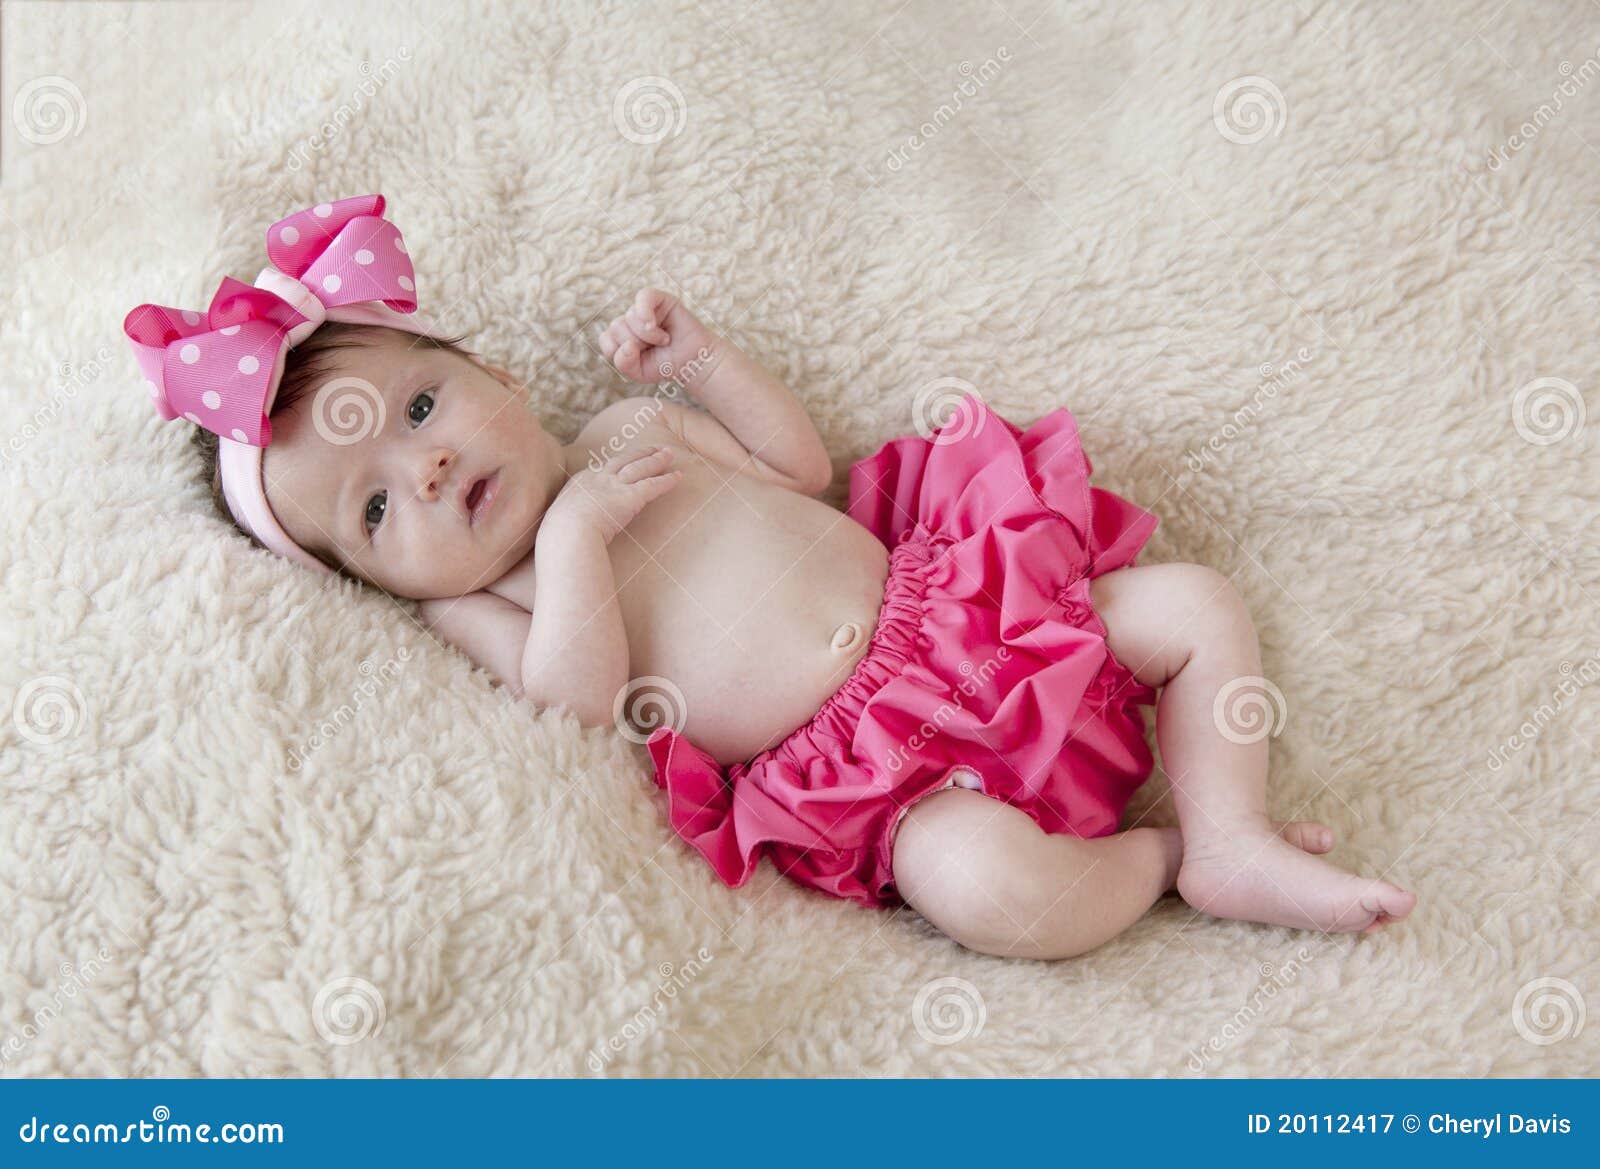 Newborn Baby Girl in Pink stock image. Image of innocence - 20112417